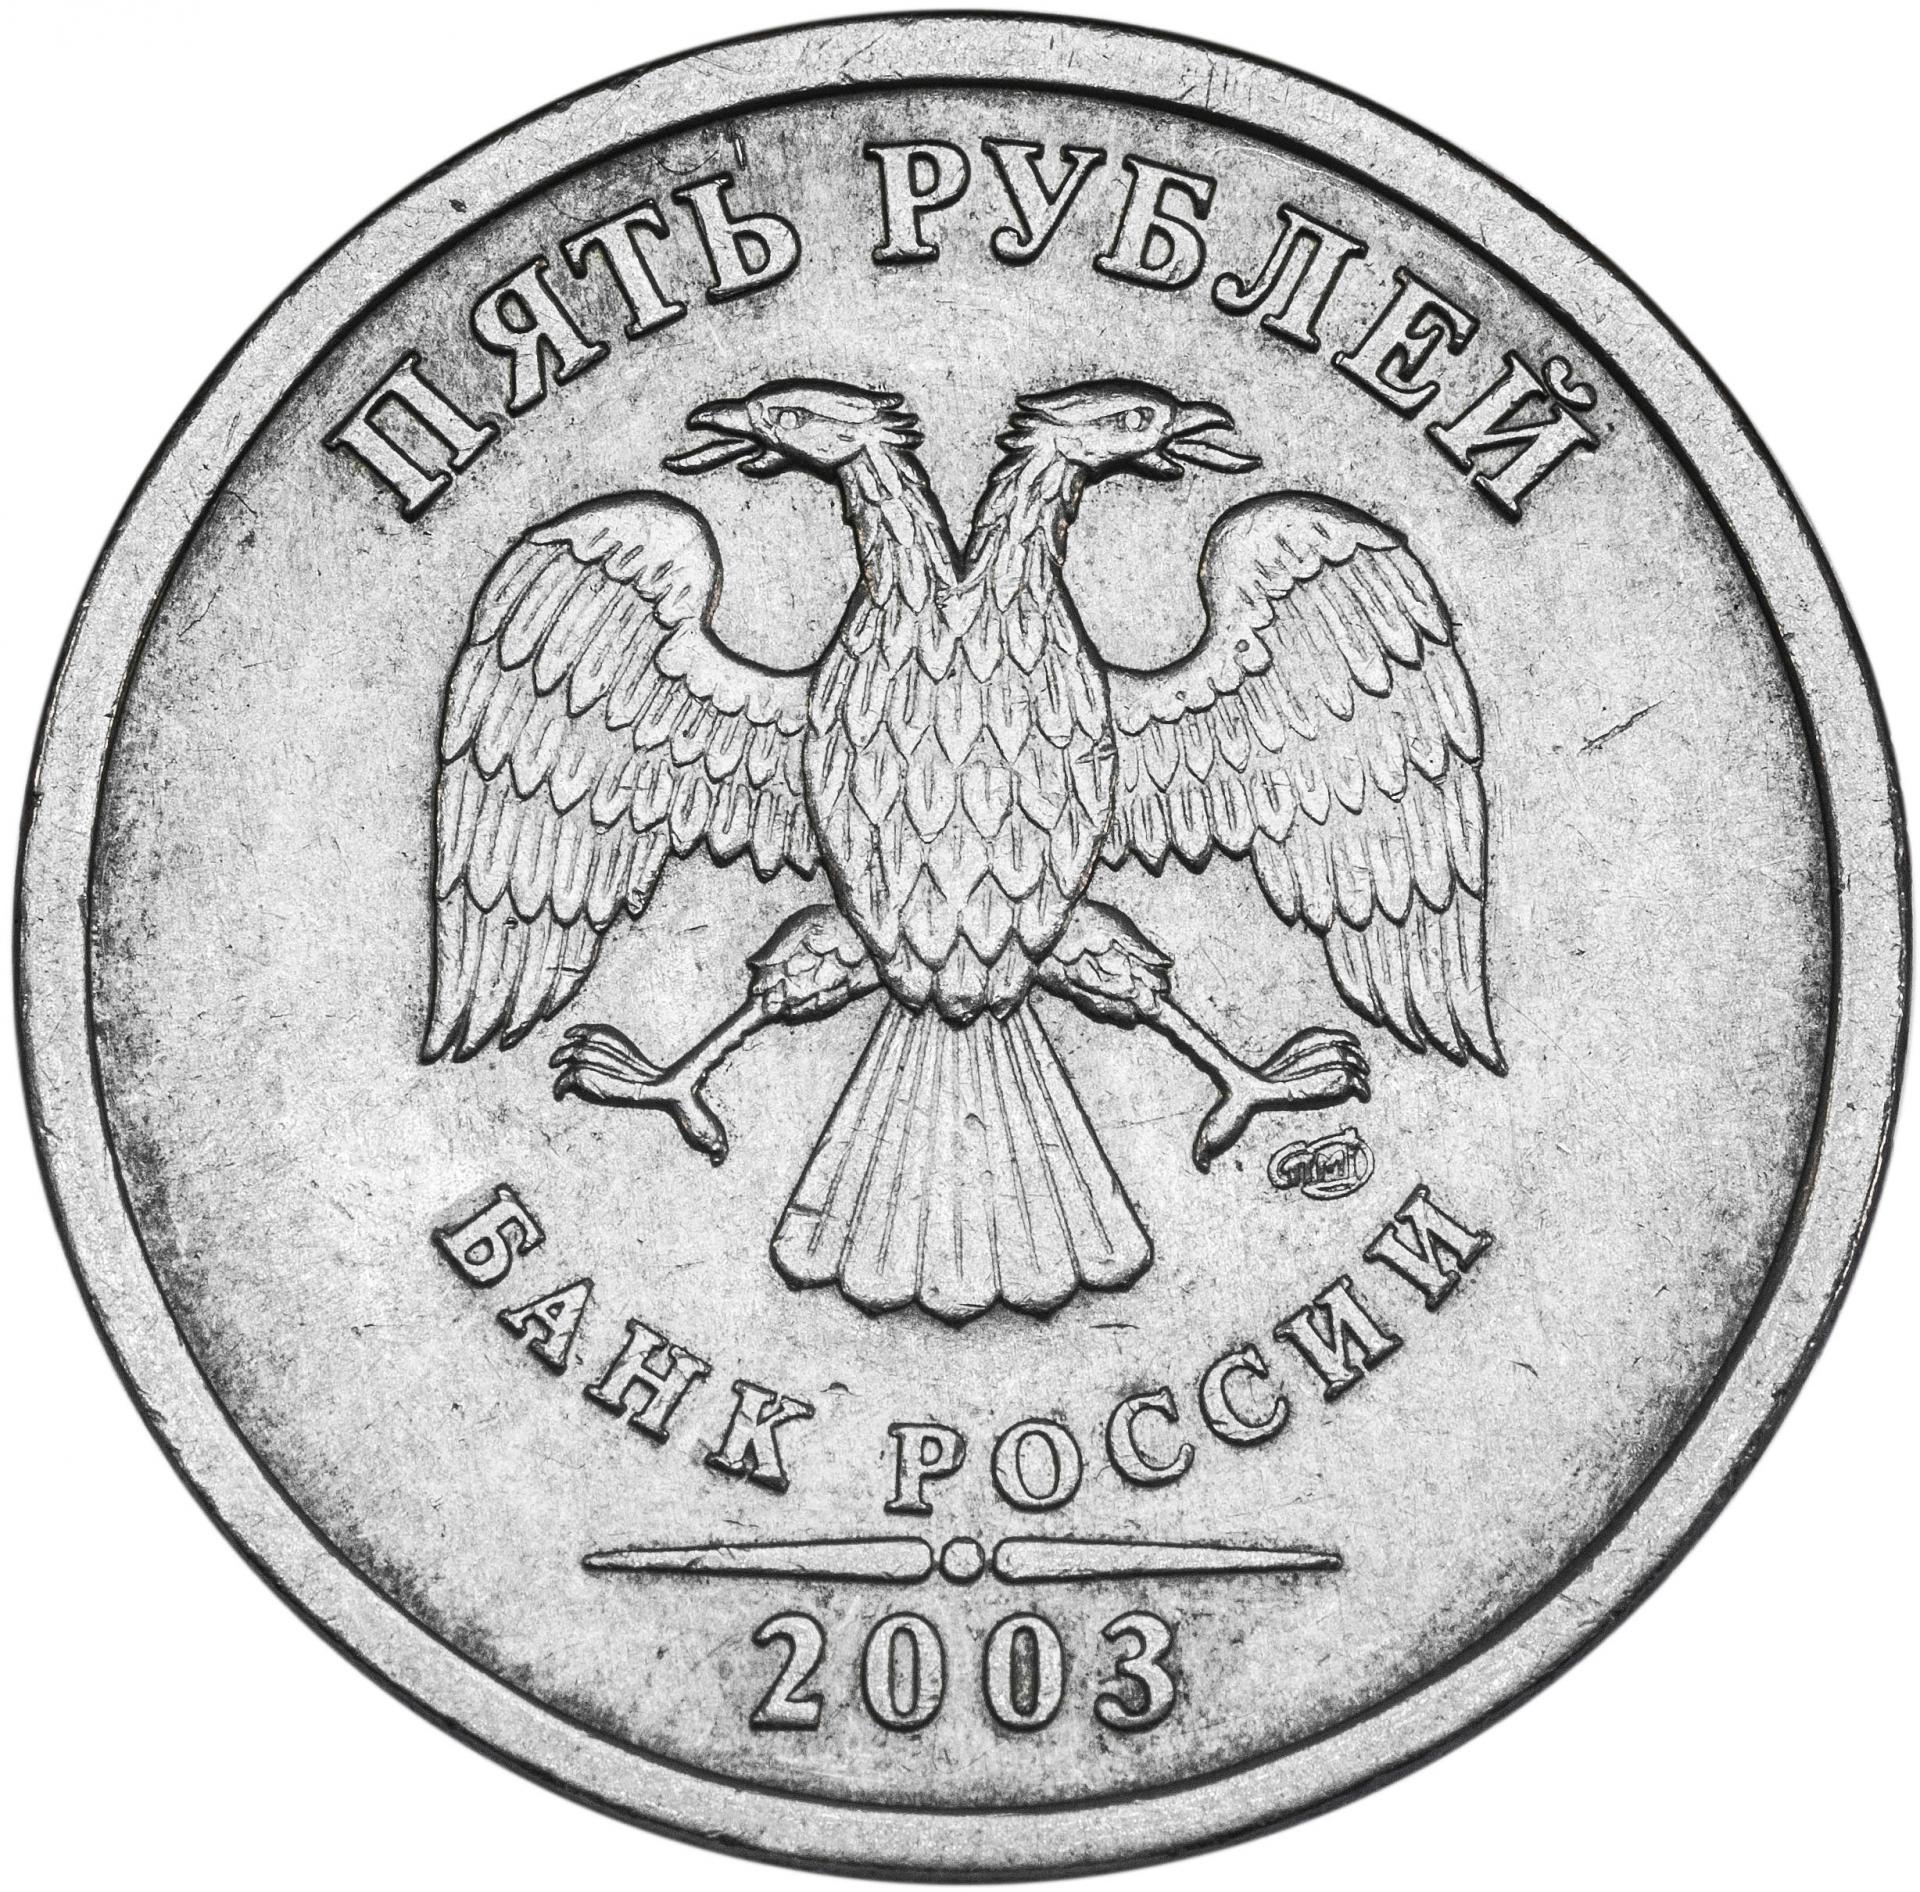 Магазины от 5 руб цены. Двуглавый орёл на монетах России. Двуглавый Орел Билибина на монетах.